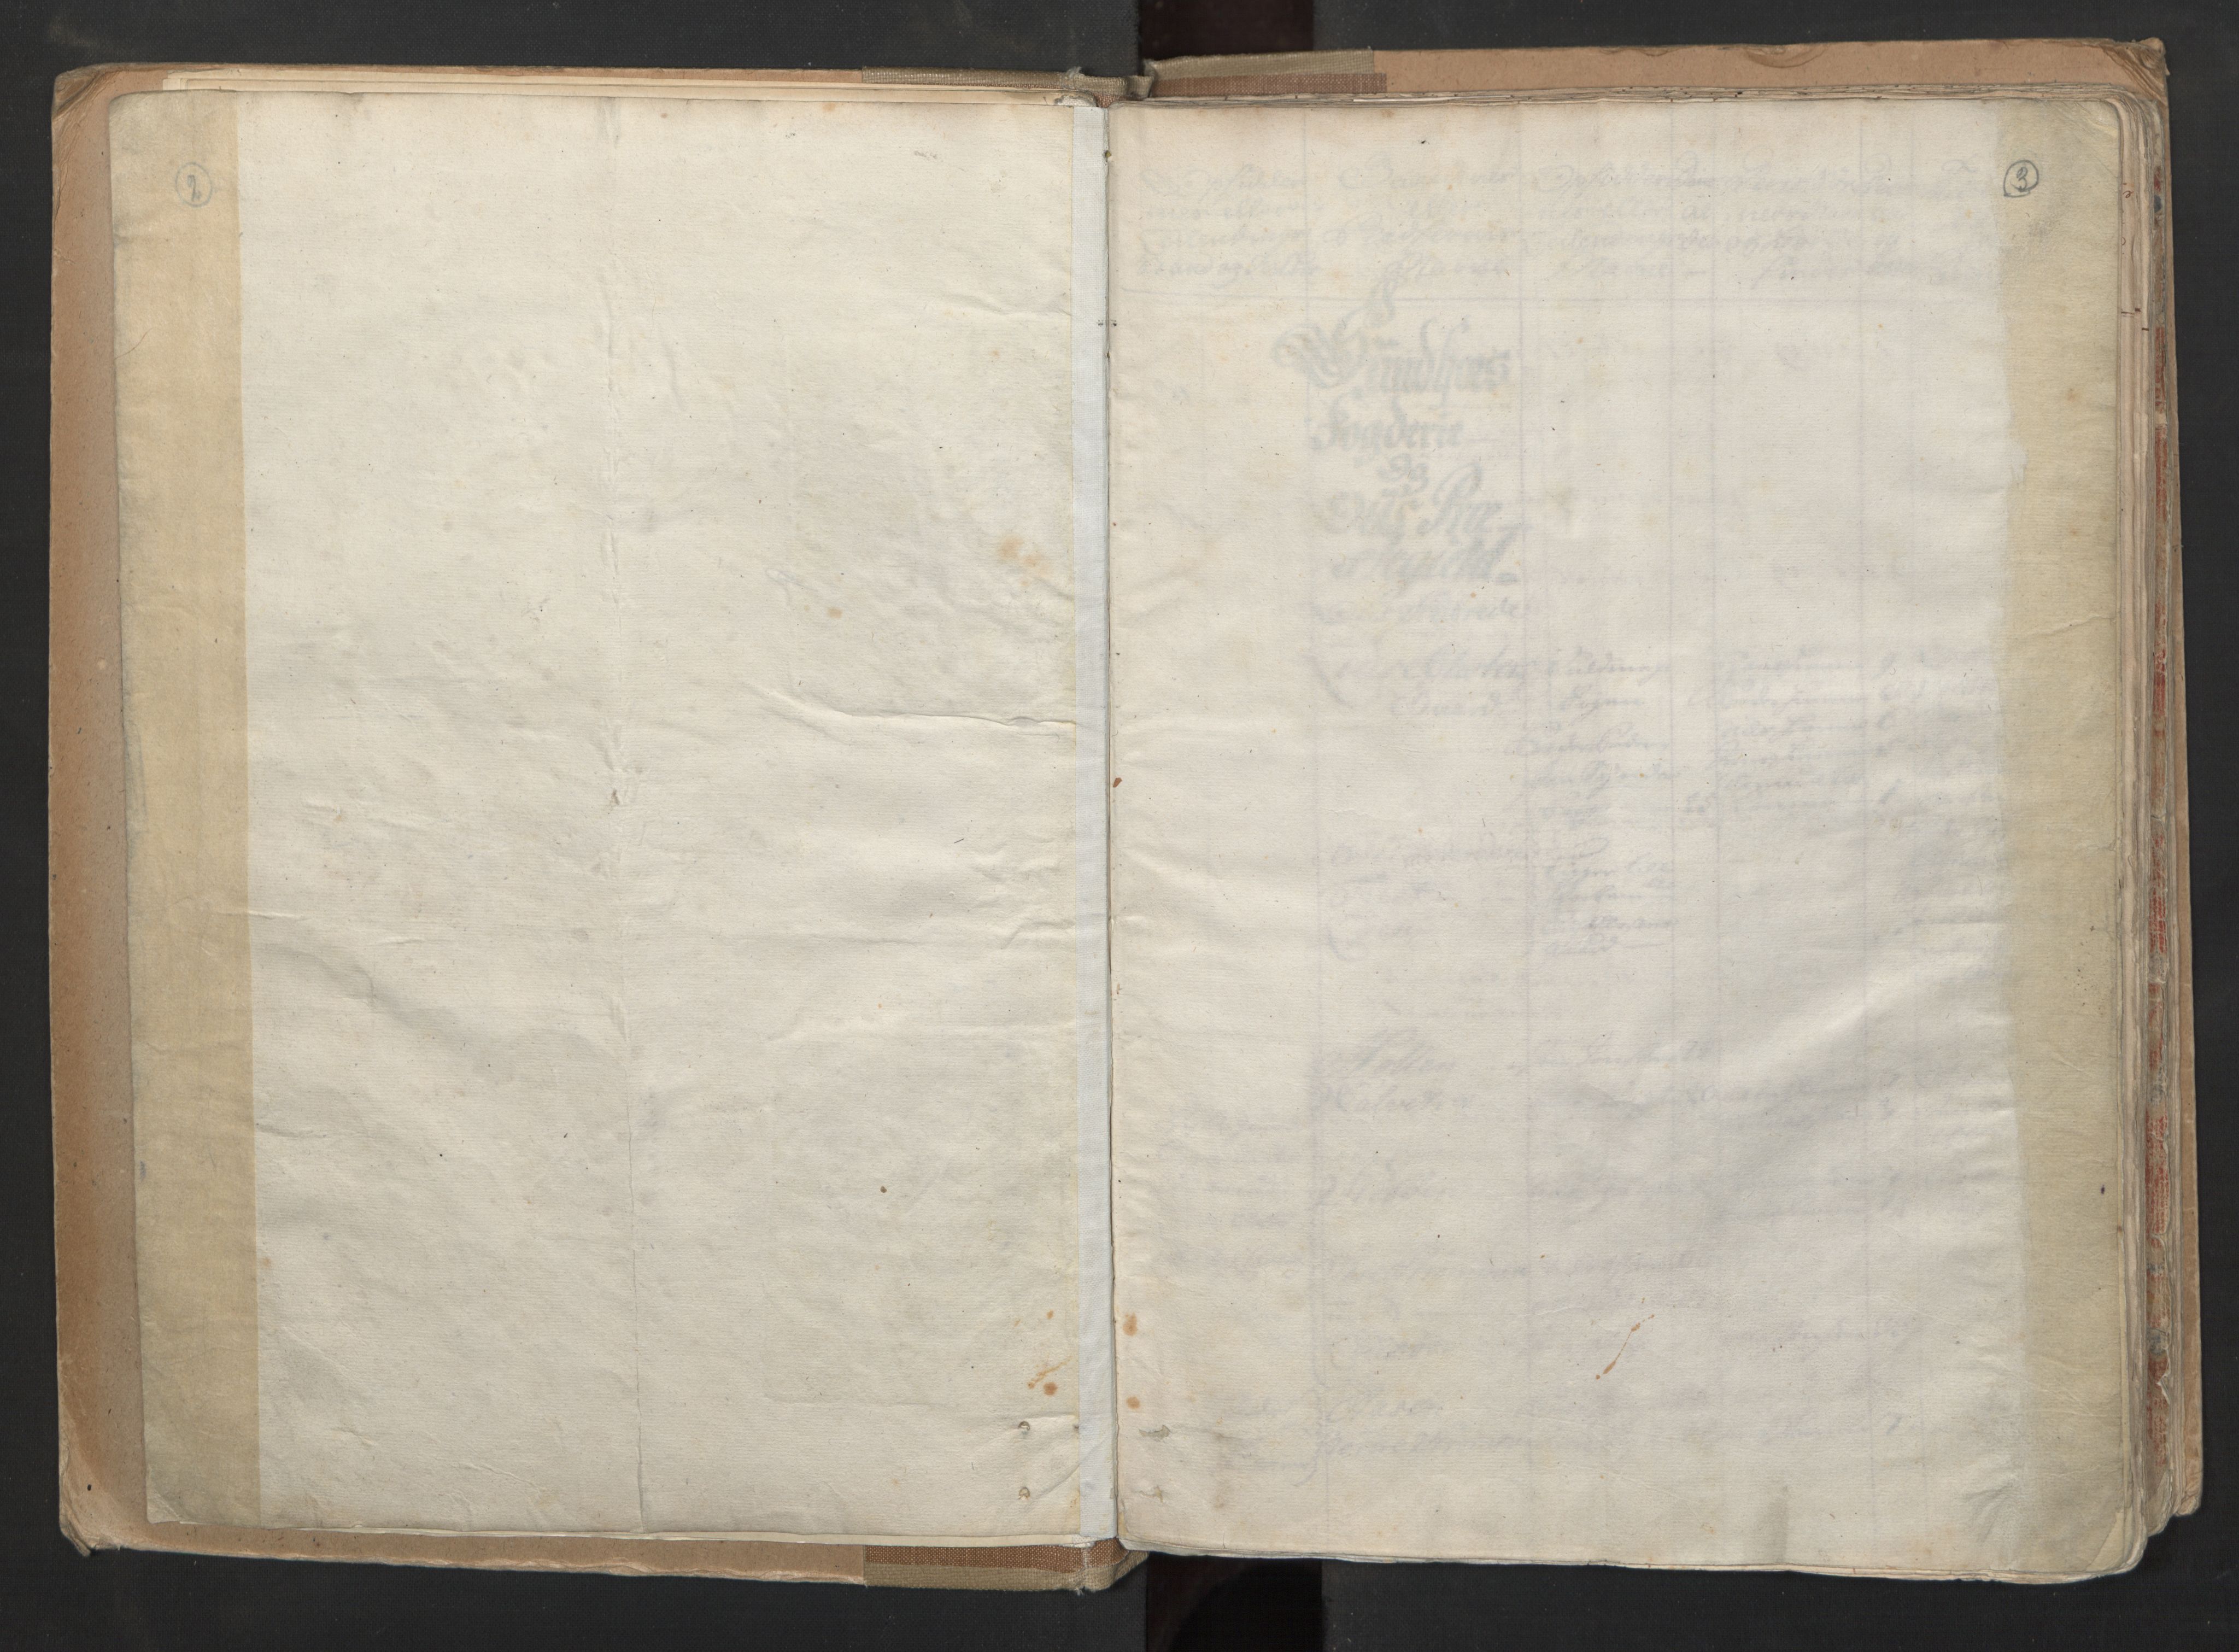 RA, Census (manntall) 1701, no. 6: Sunnhordland fogderi and Hardanger fogderi, 1701, p. 2-3